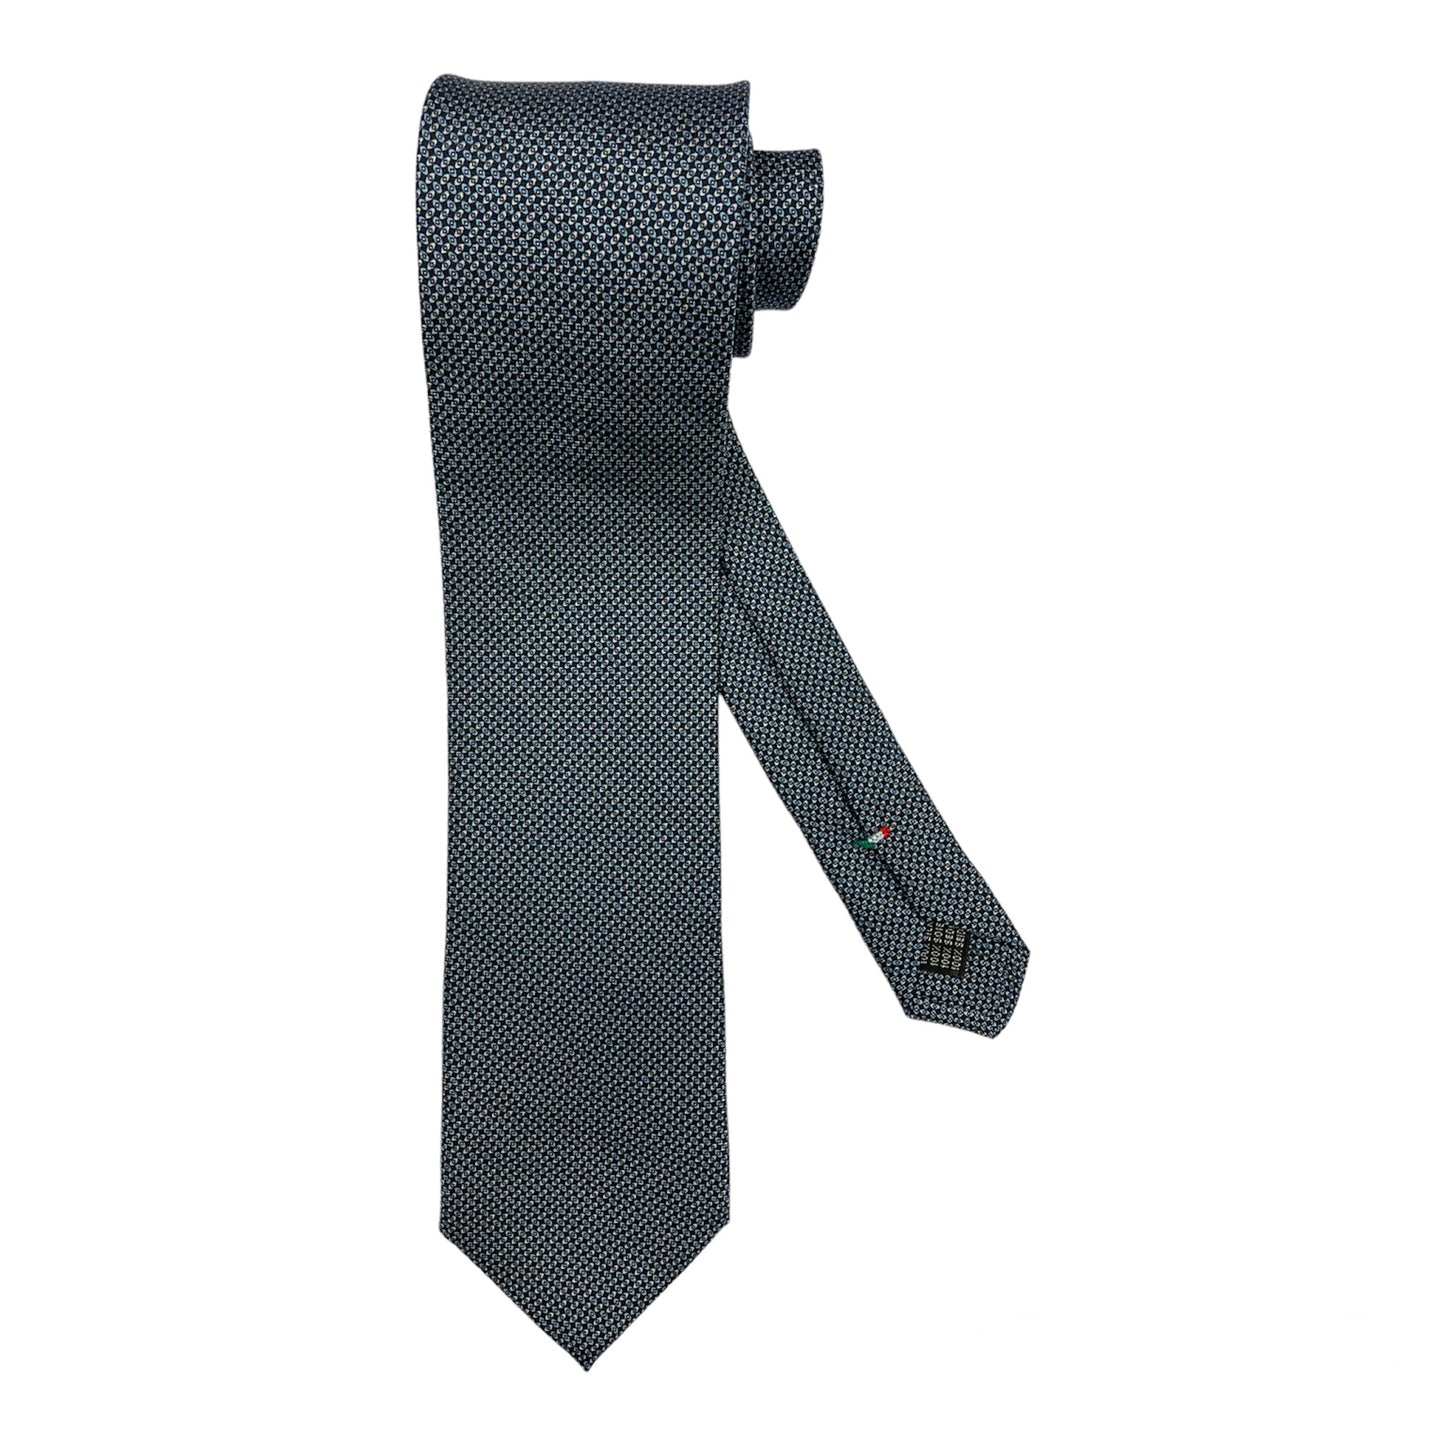 Blue silk tie with geometric micro-pattern